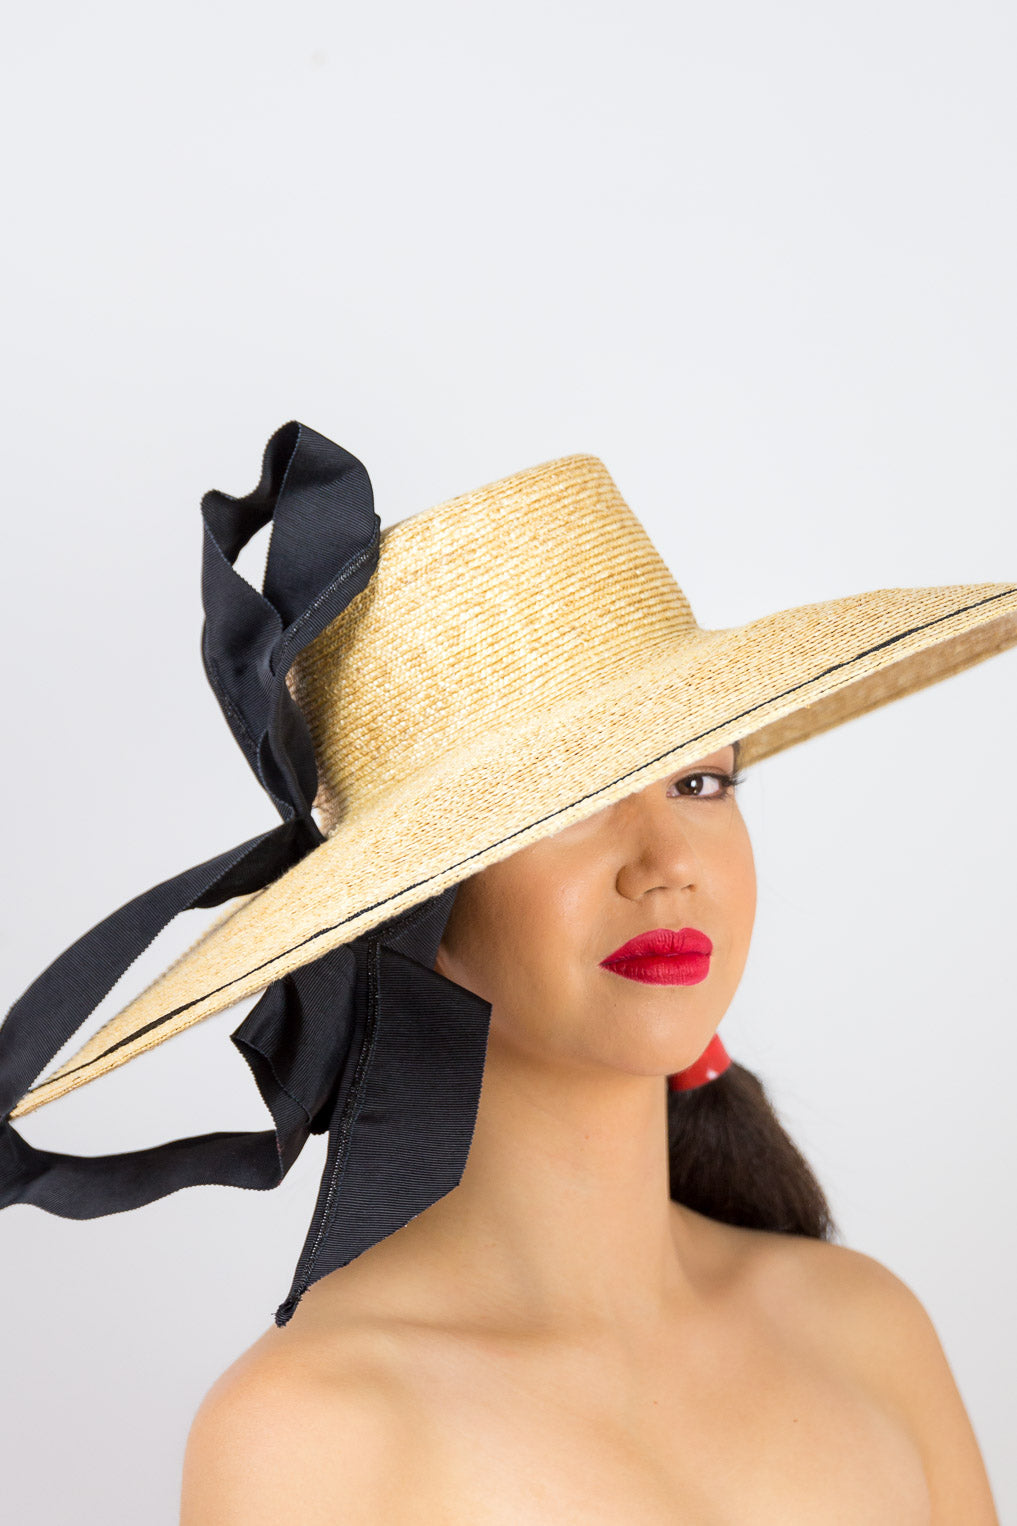 LUNA- Large fine straw braid hat with large black bow